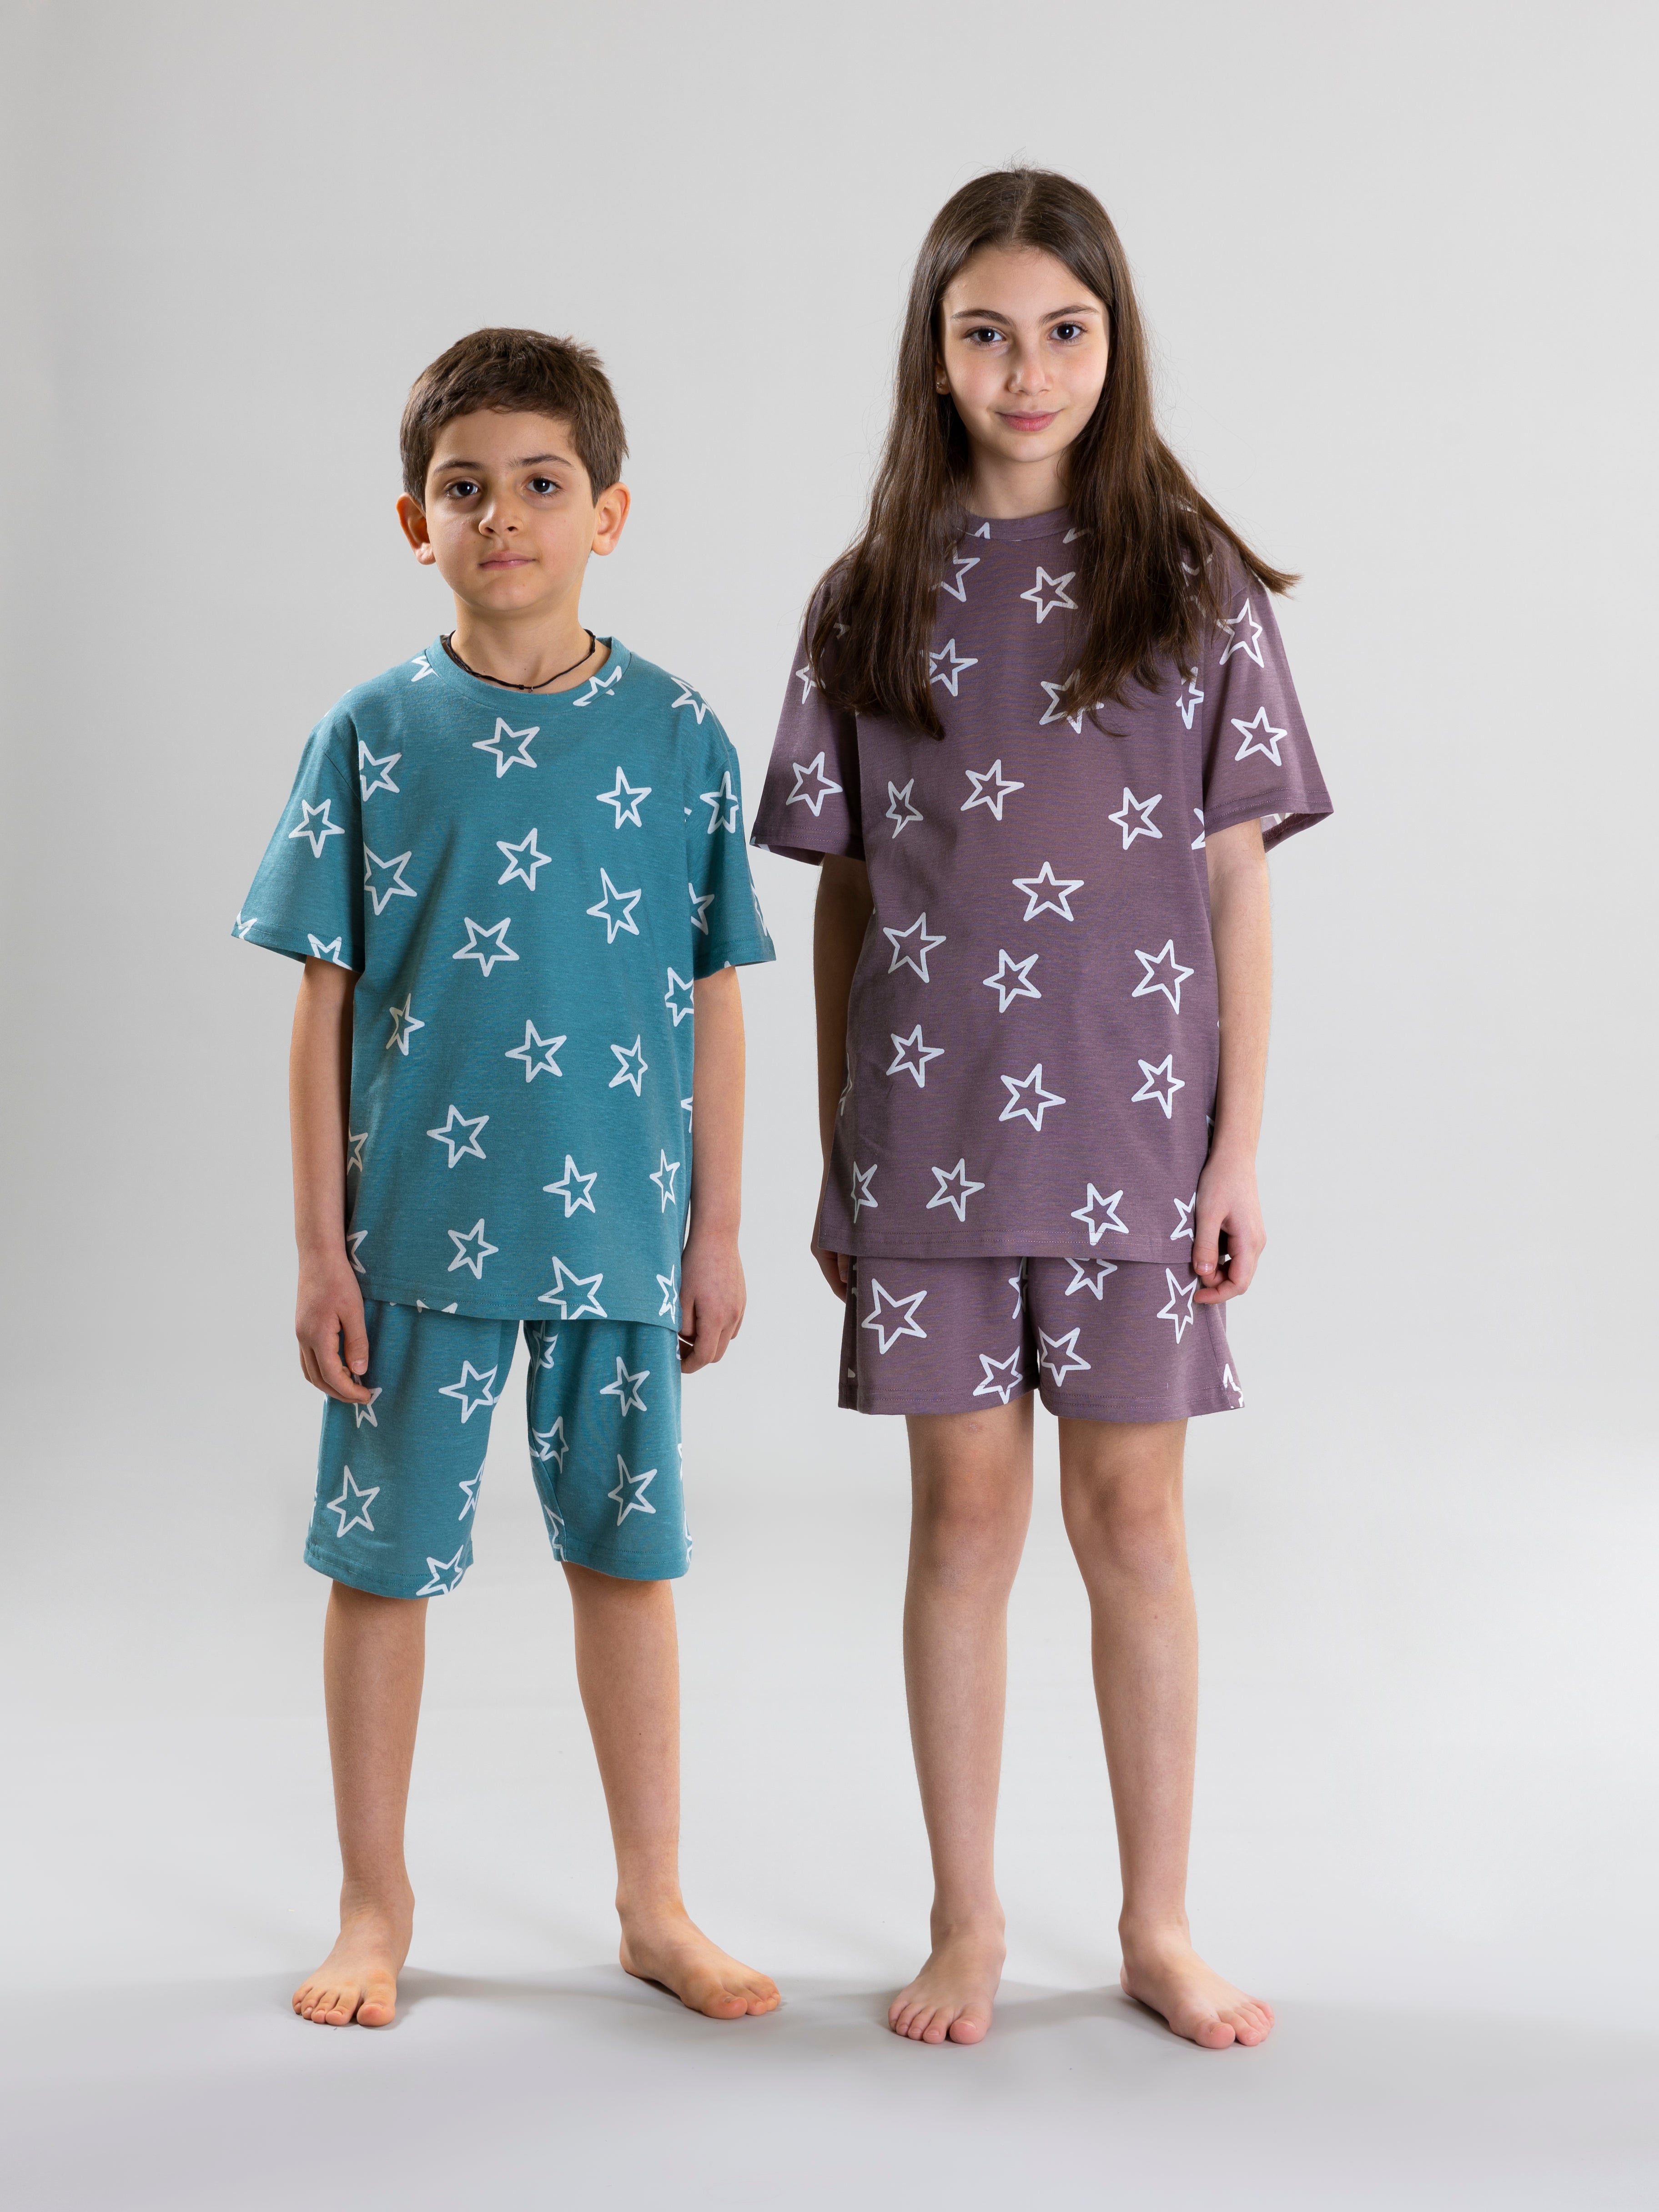 Star Design Pyjama Set For Girls - Rosewood